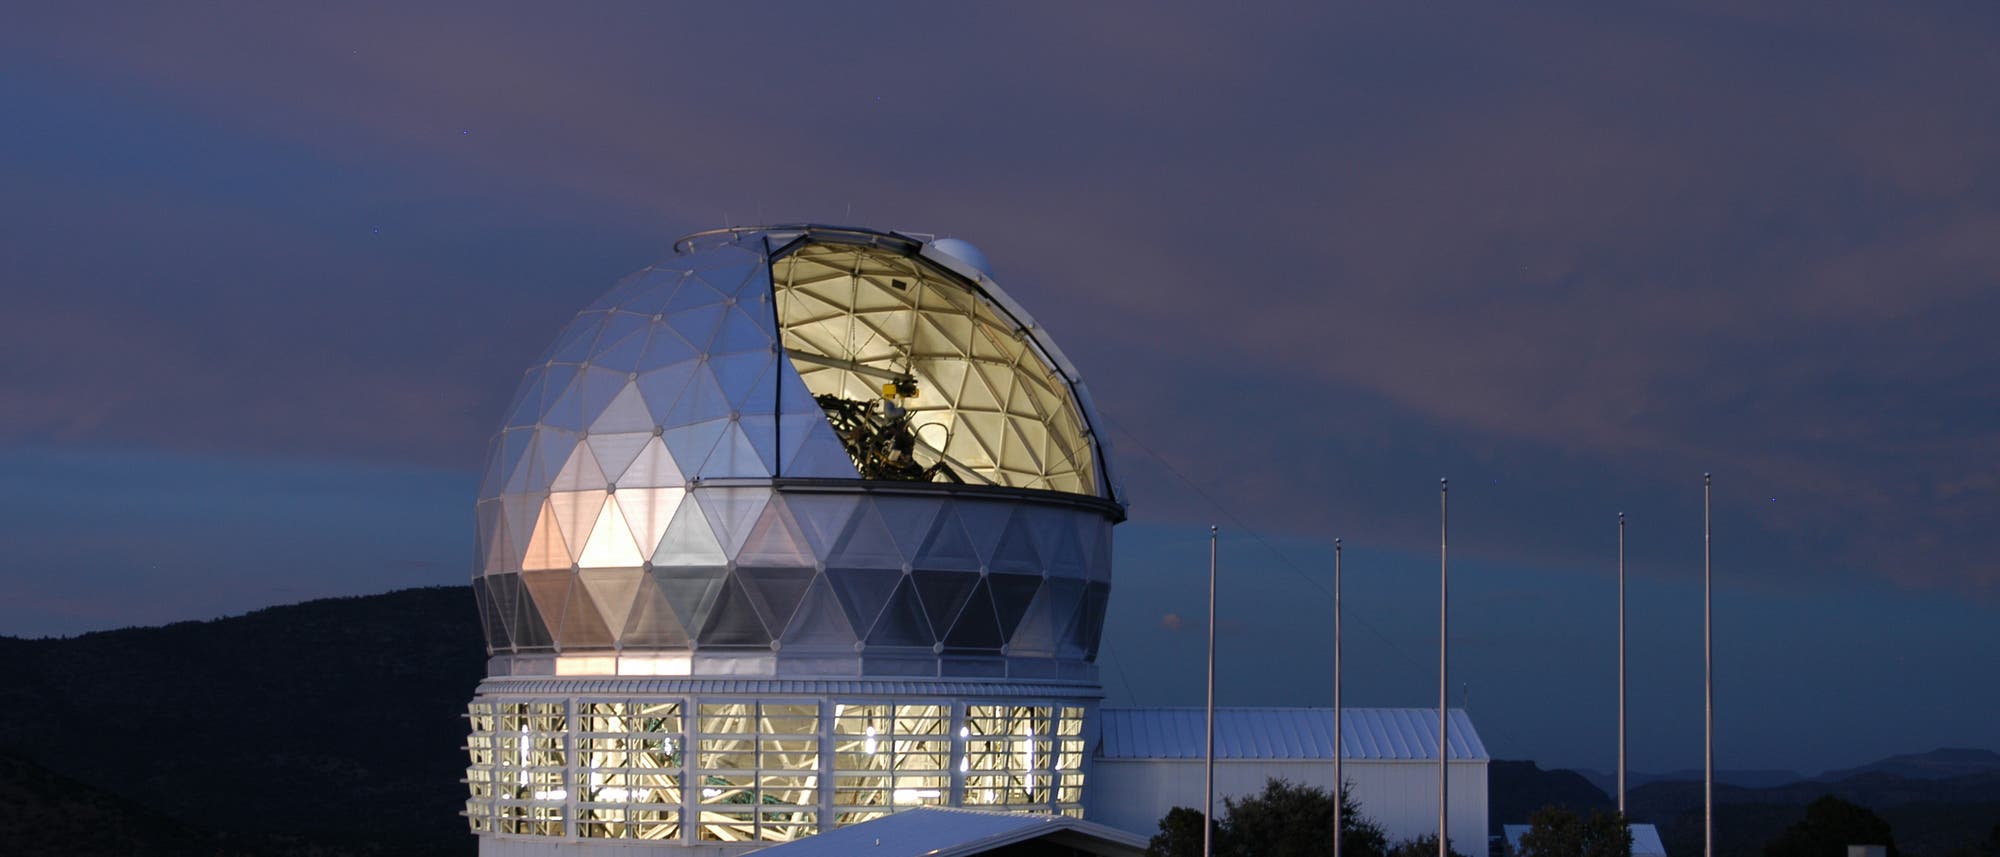 Das Hobby-Eberly Teleskop